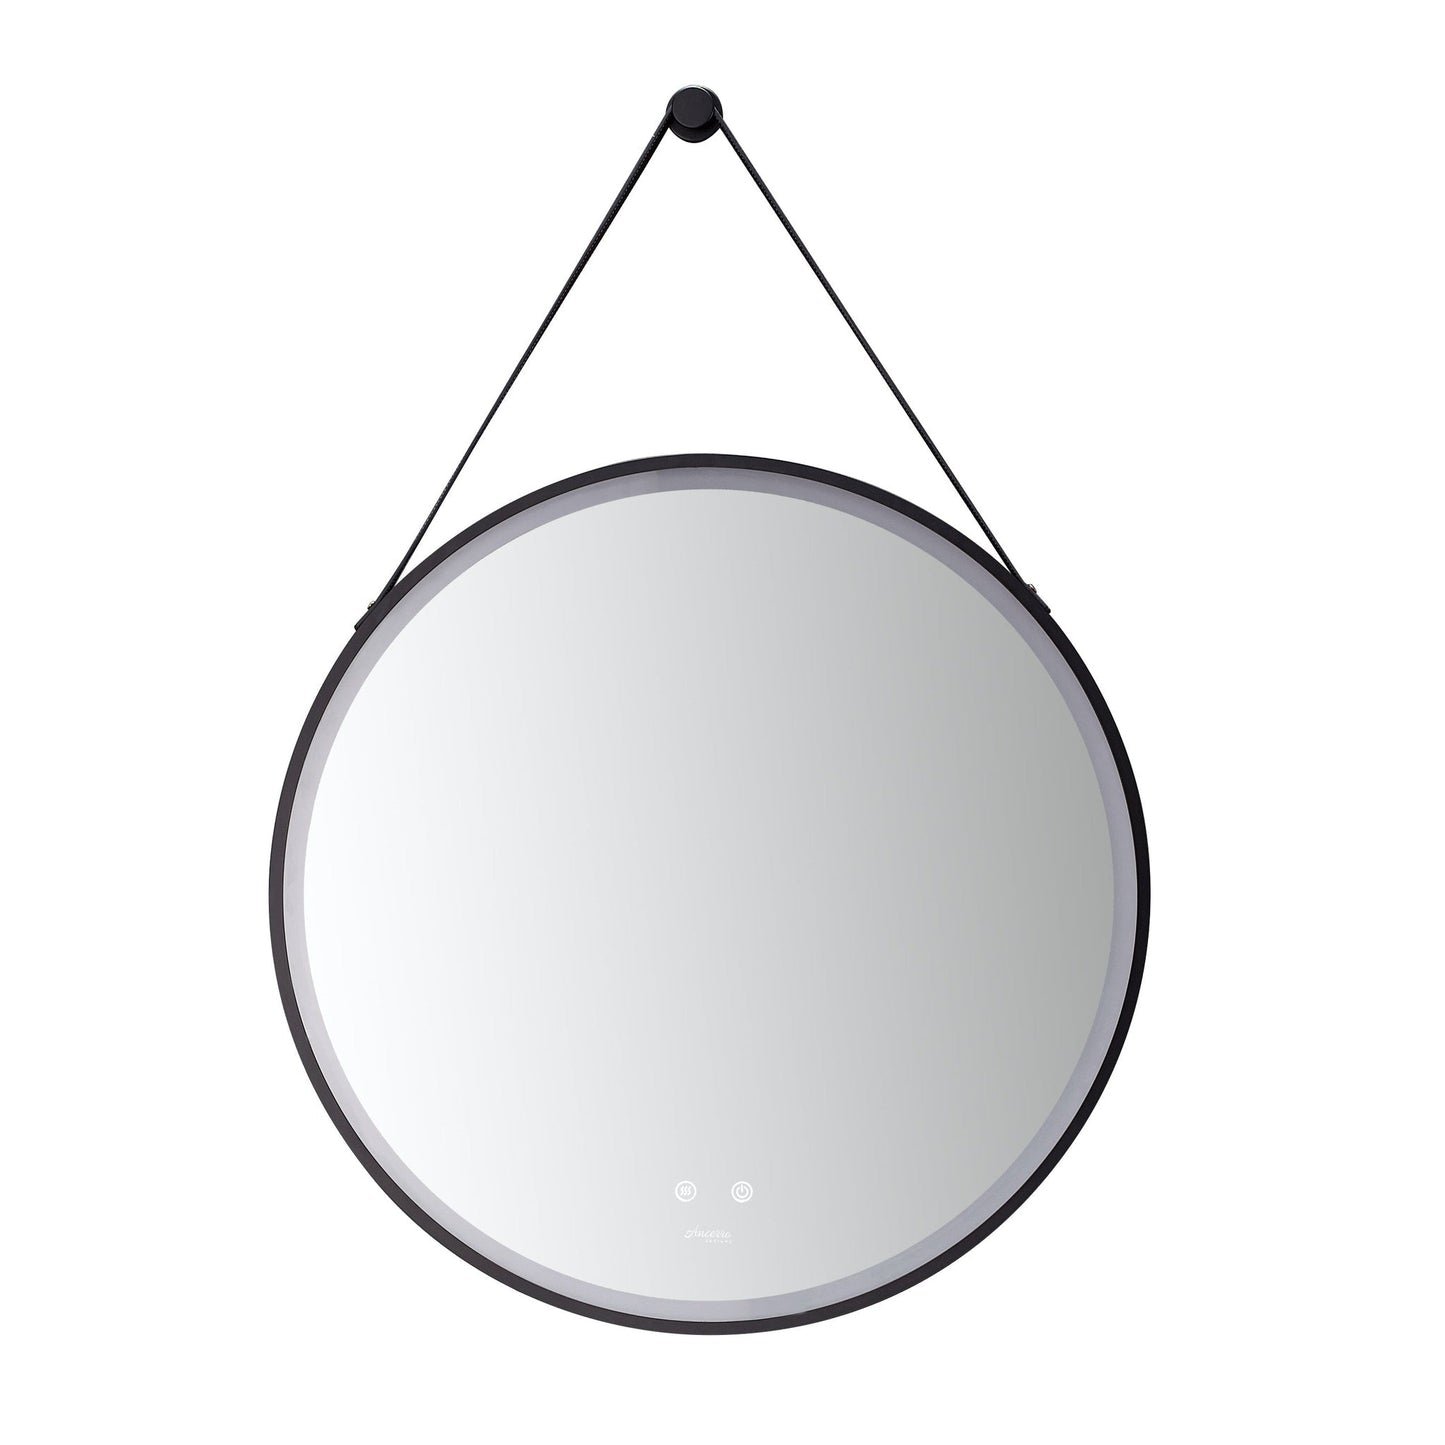 Ancerre Designs Sangle 24" Modern Round LED Lighted Black Framed Bathroom Vanity Mirror With Dimmer, Defogger and Vegan Leather Strap